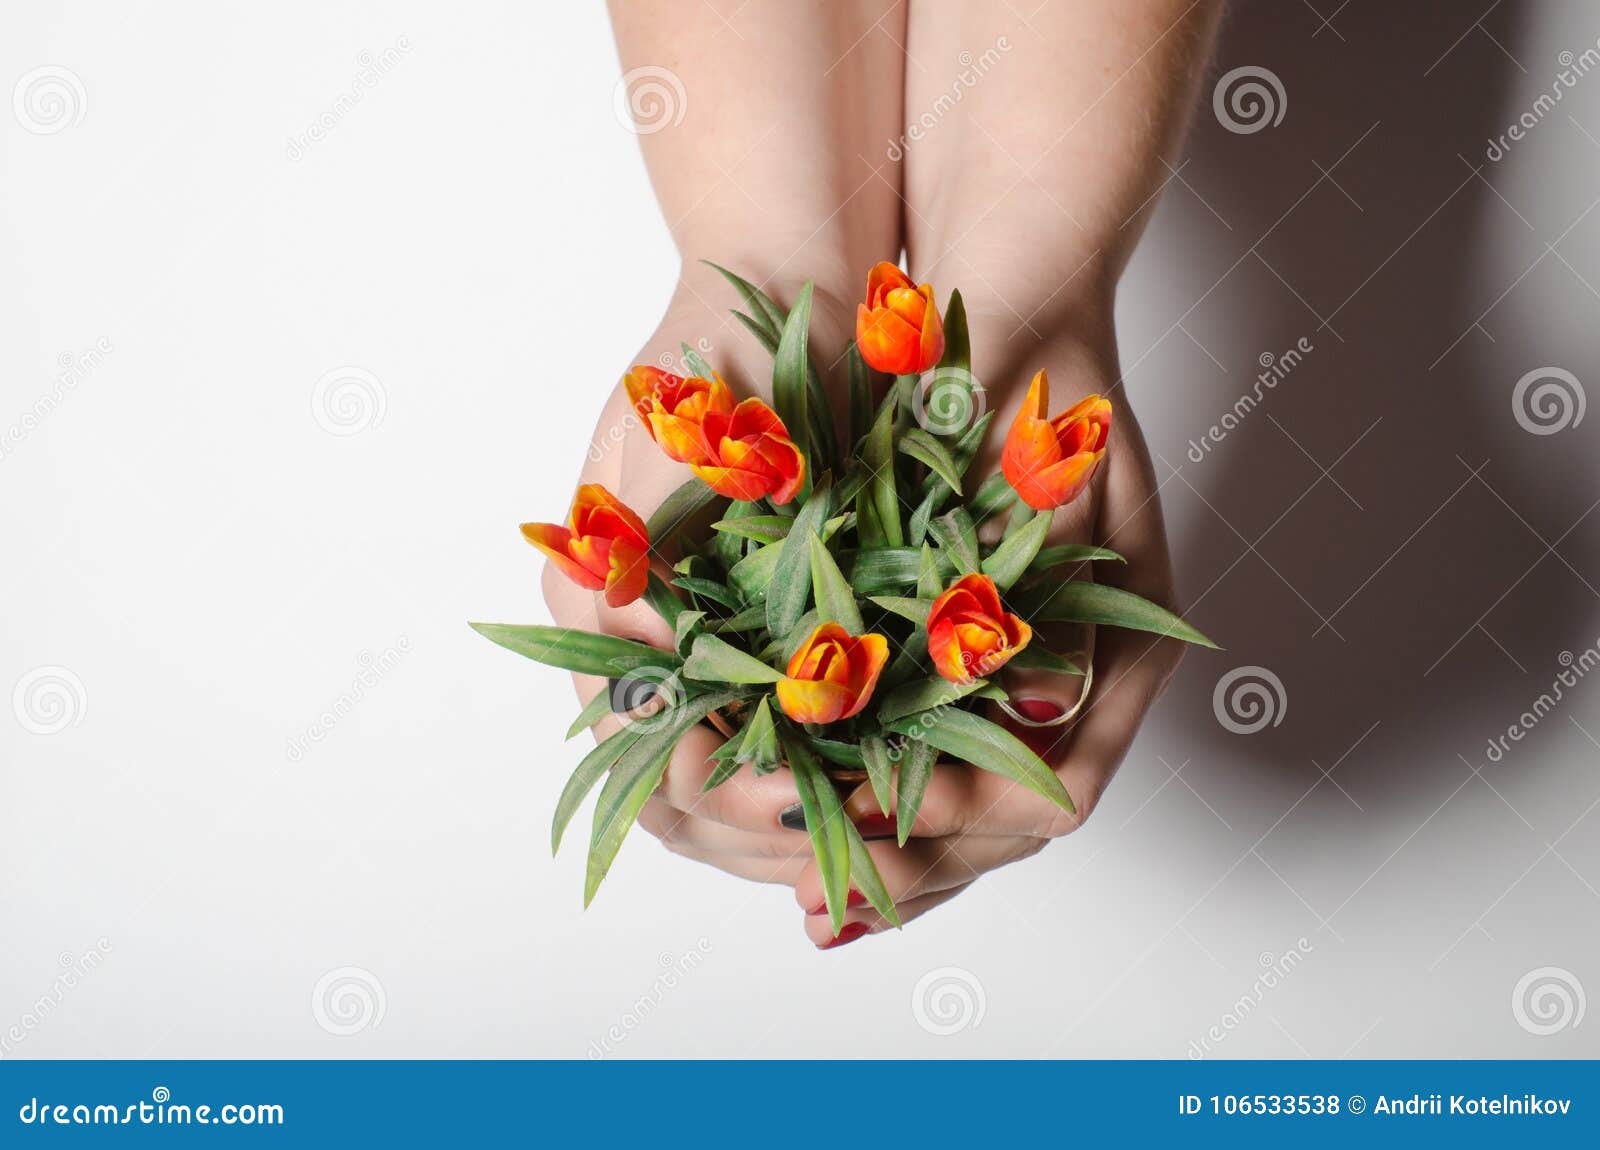 over white background girl holding flowers